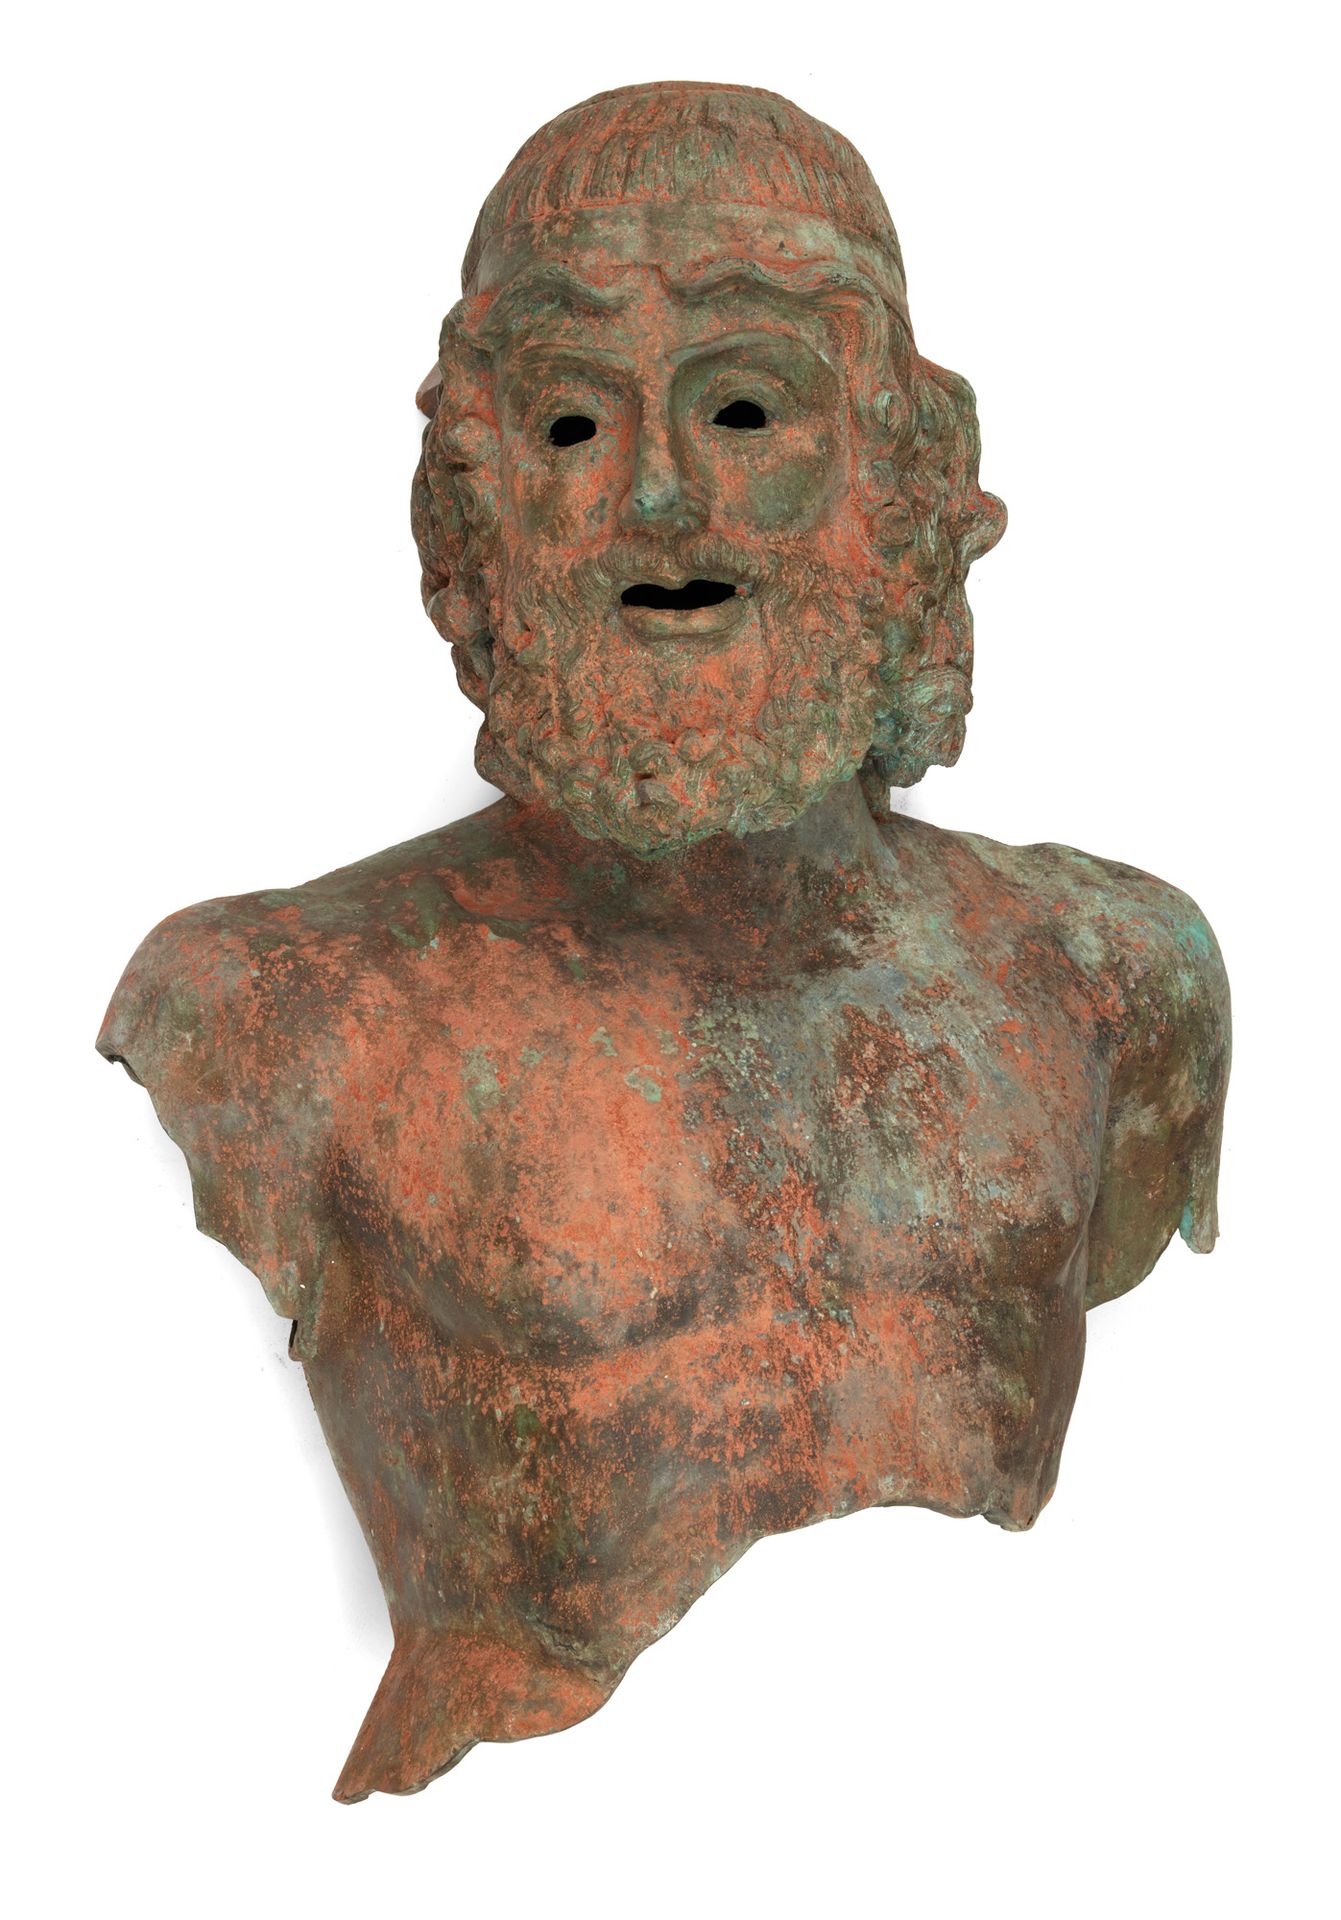 Buste de Neptune d'après l'Antique 仿古后的海神半身像

带有铜锈的铸铁（氧化和生锈）。

20世纪的作品

高度：80厘米